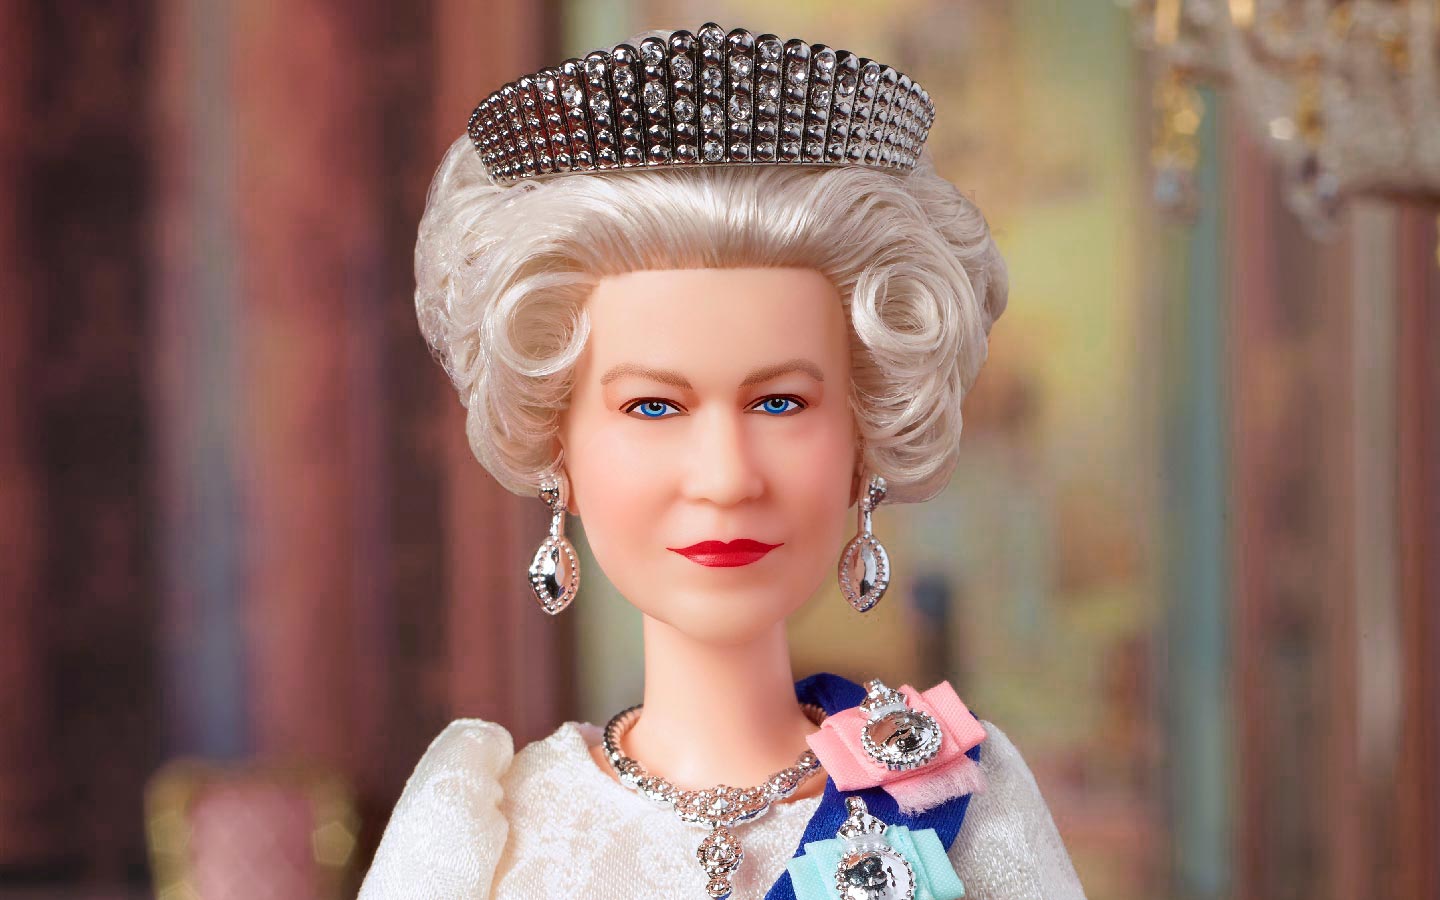 Queen Elizabeth II inspired Barbie doll